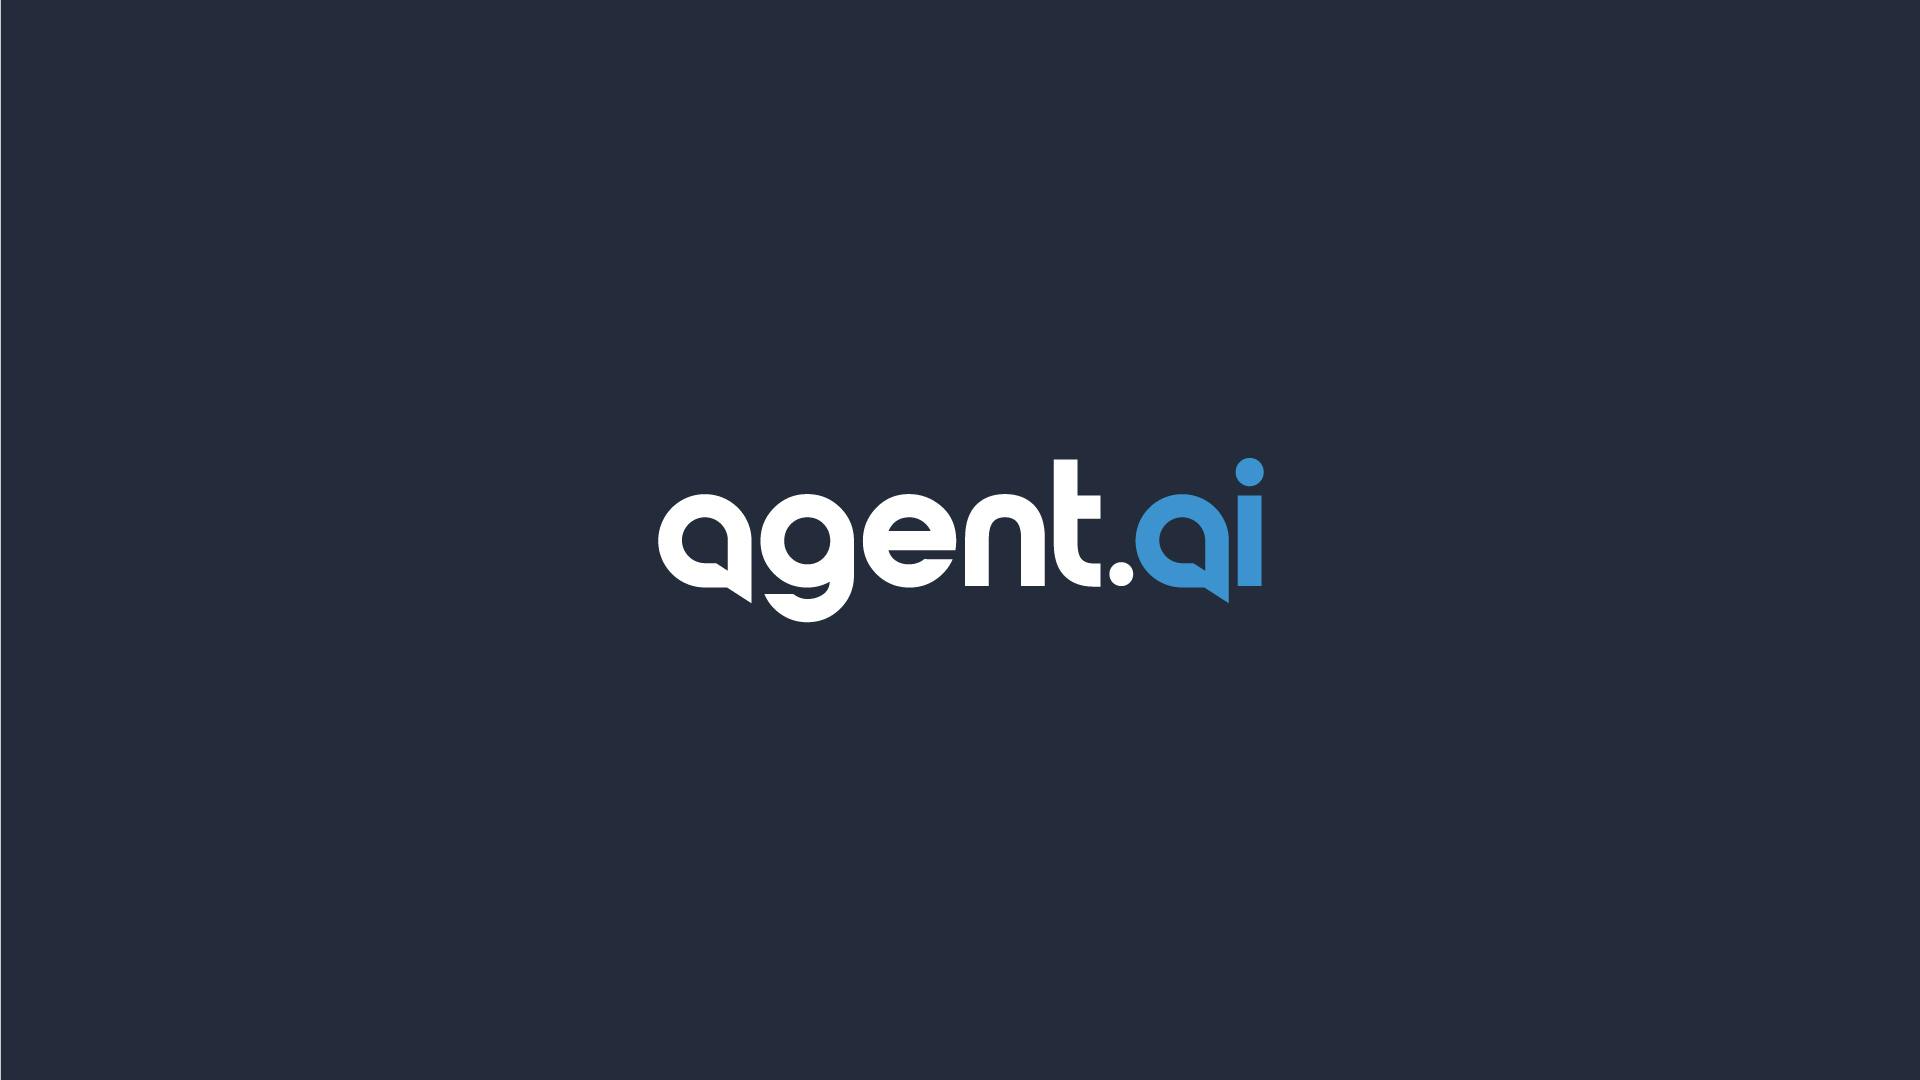 agent.ai logo on a dark blue background